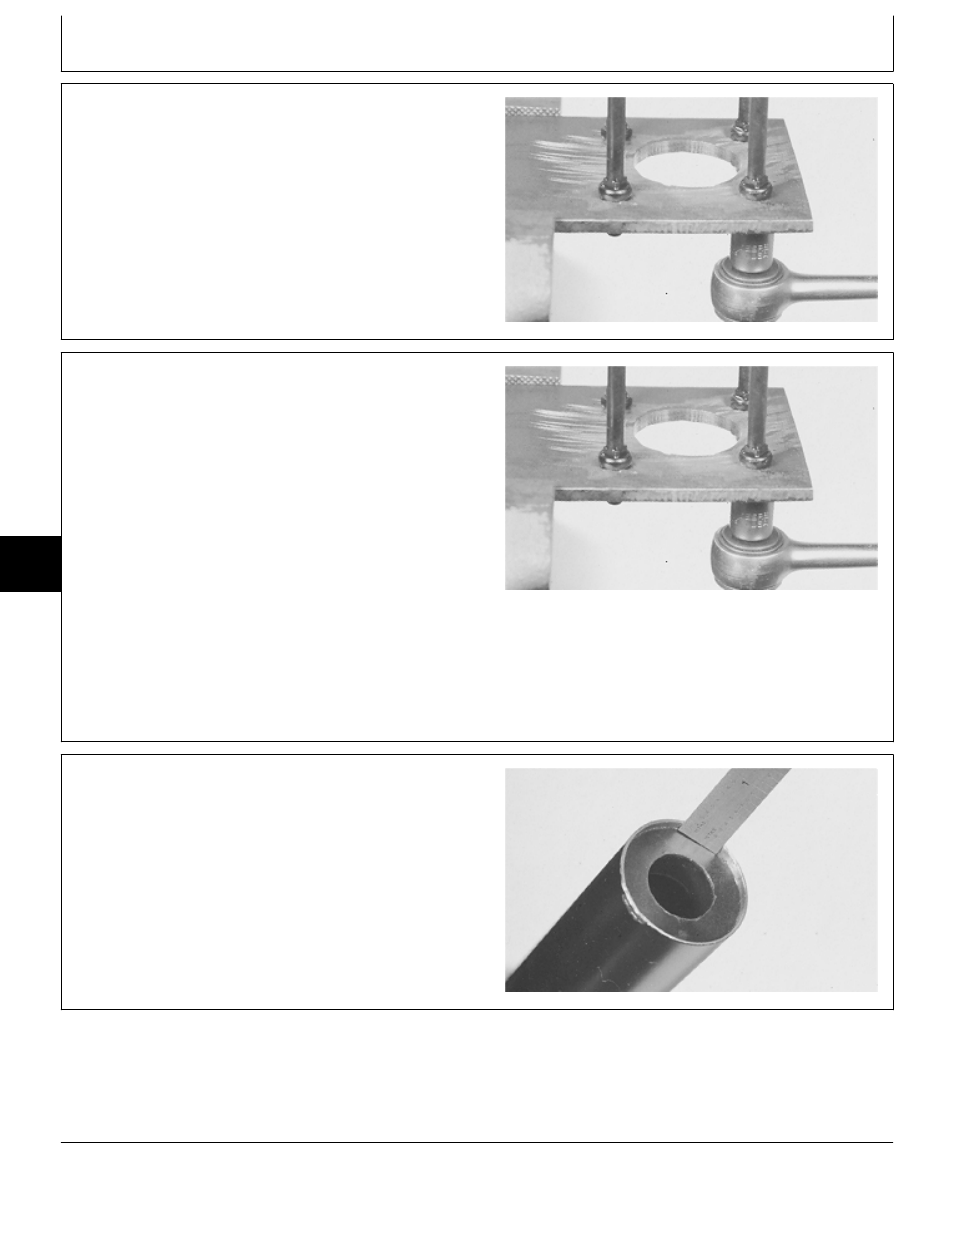 Assemble steering valve and column | John Deere 318 User Manual | Page 162 / 440